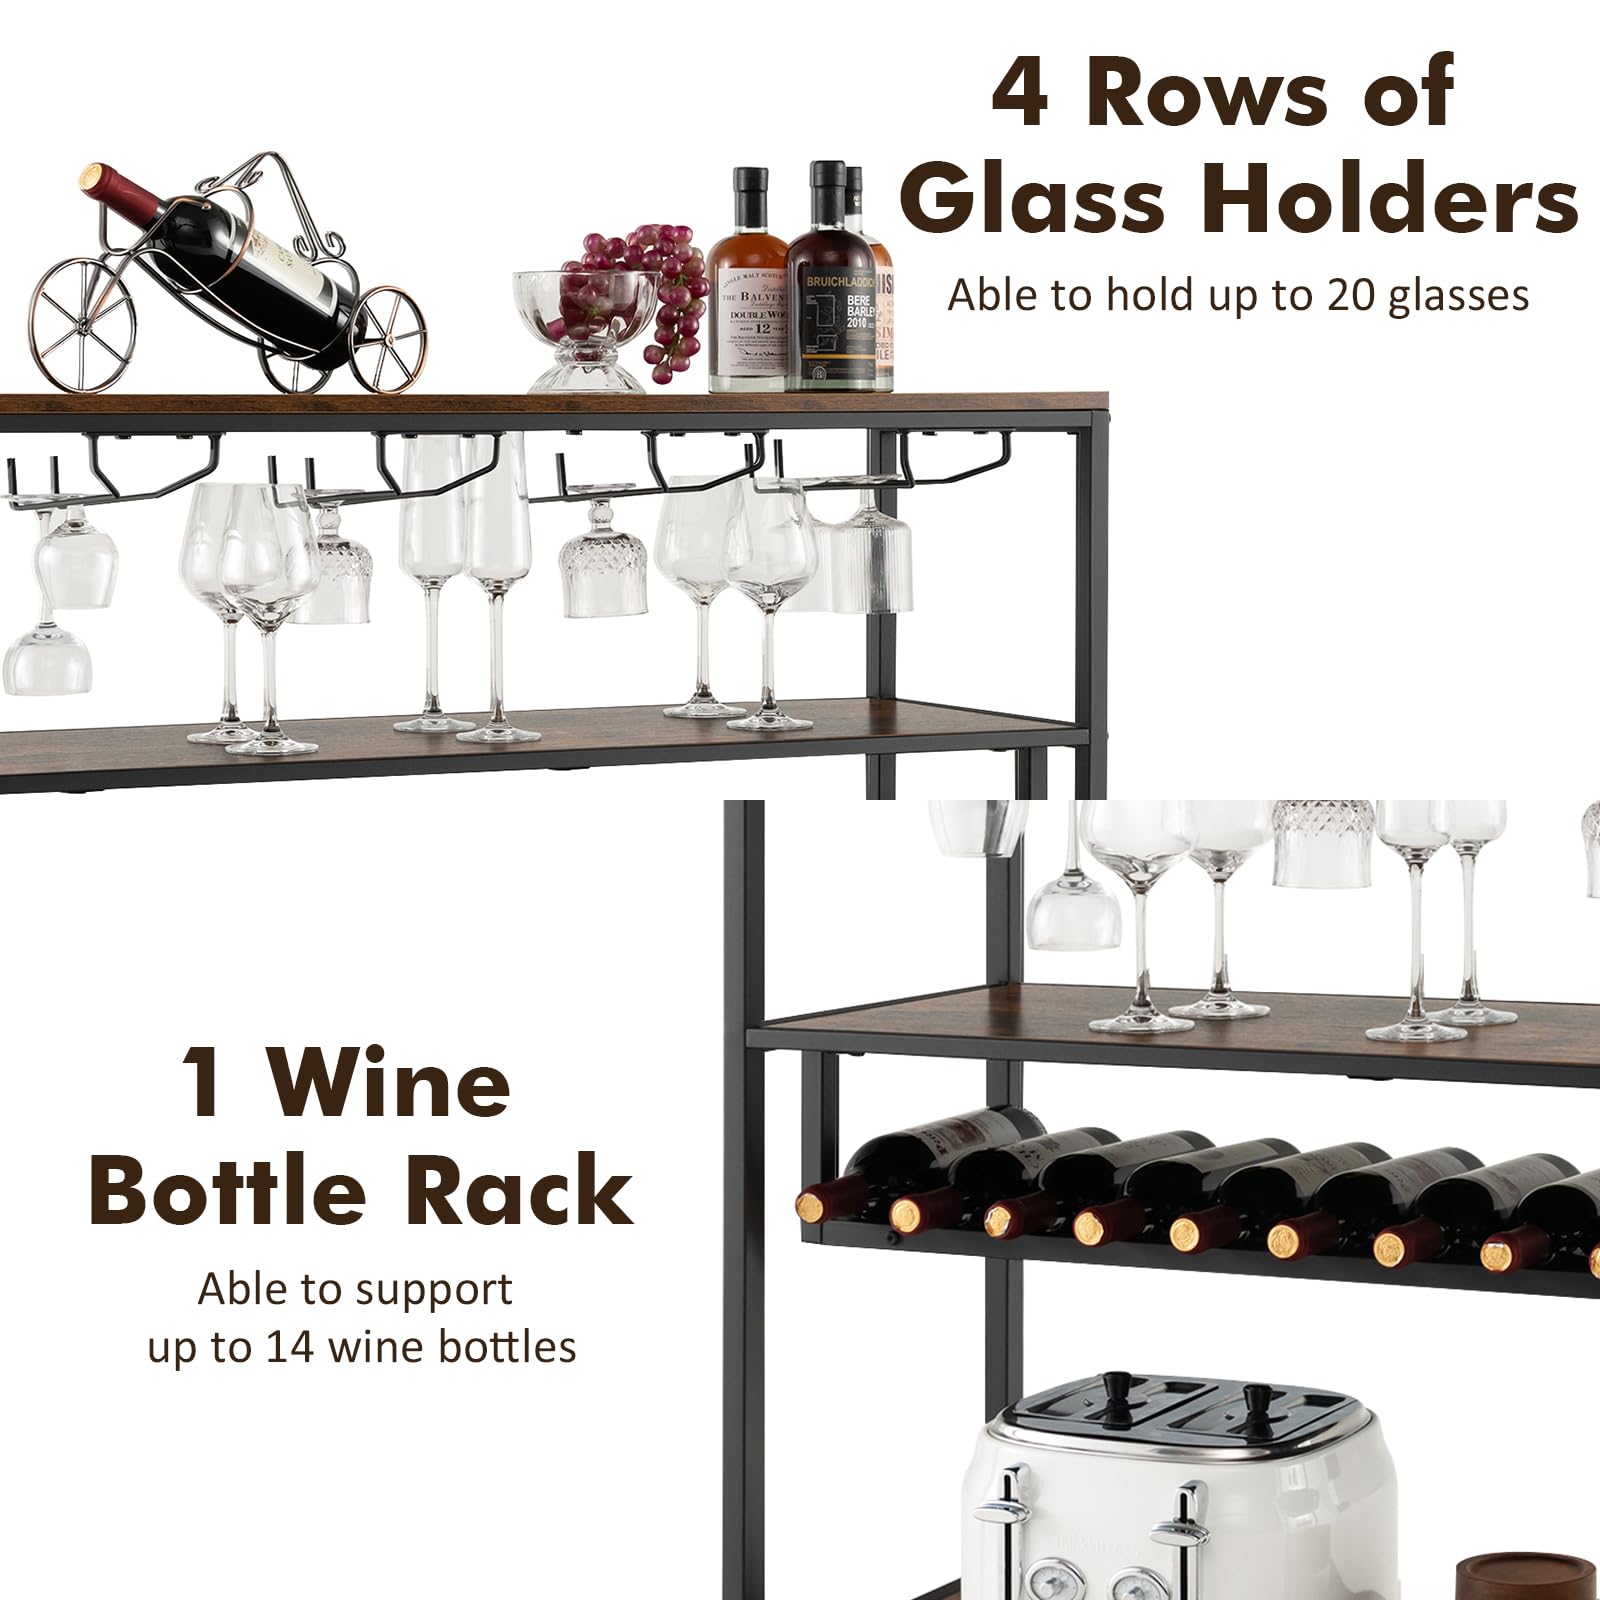 Giantex Wine Rack Table, Freestanding 13-Bottle Wooden Wine Bar Cabinet with Wine Rack